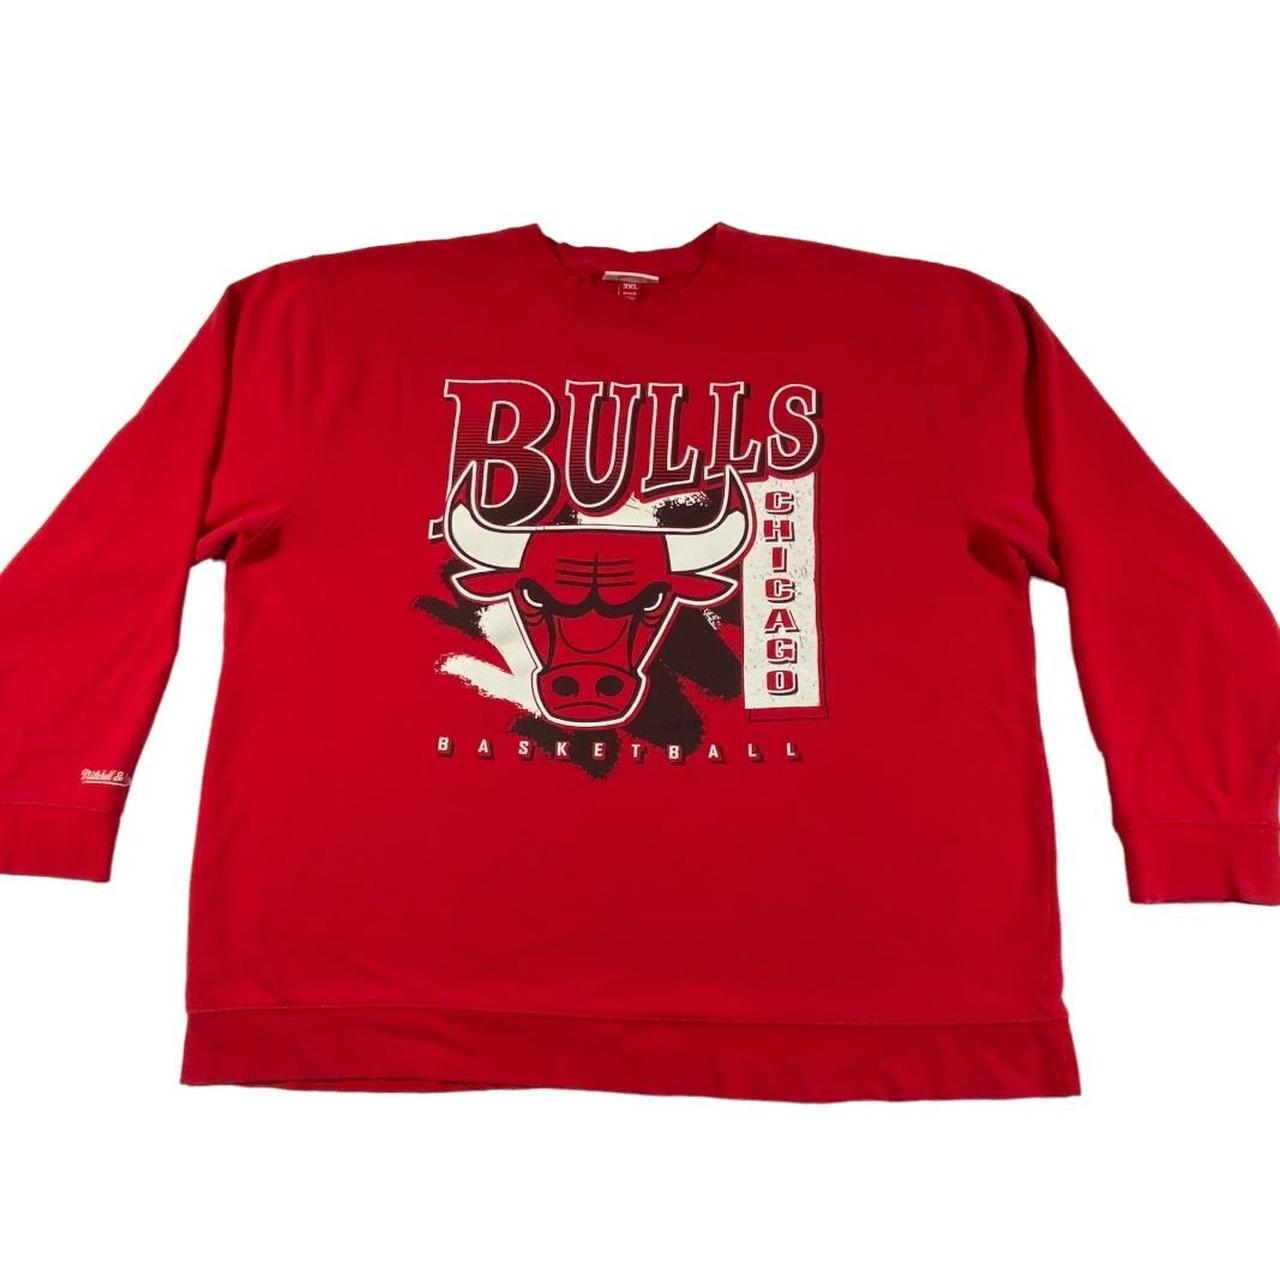 NBA Chicago Bulls Sweatshirt Print Out Logo Pullover - Depop